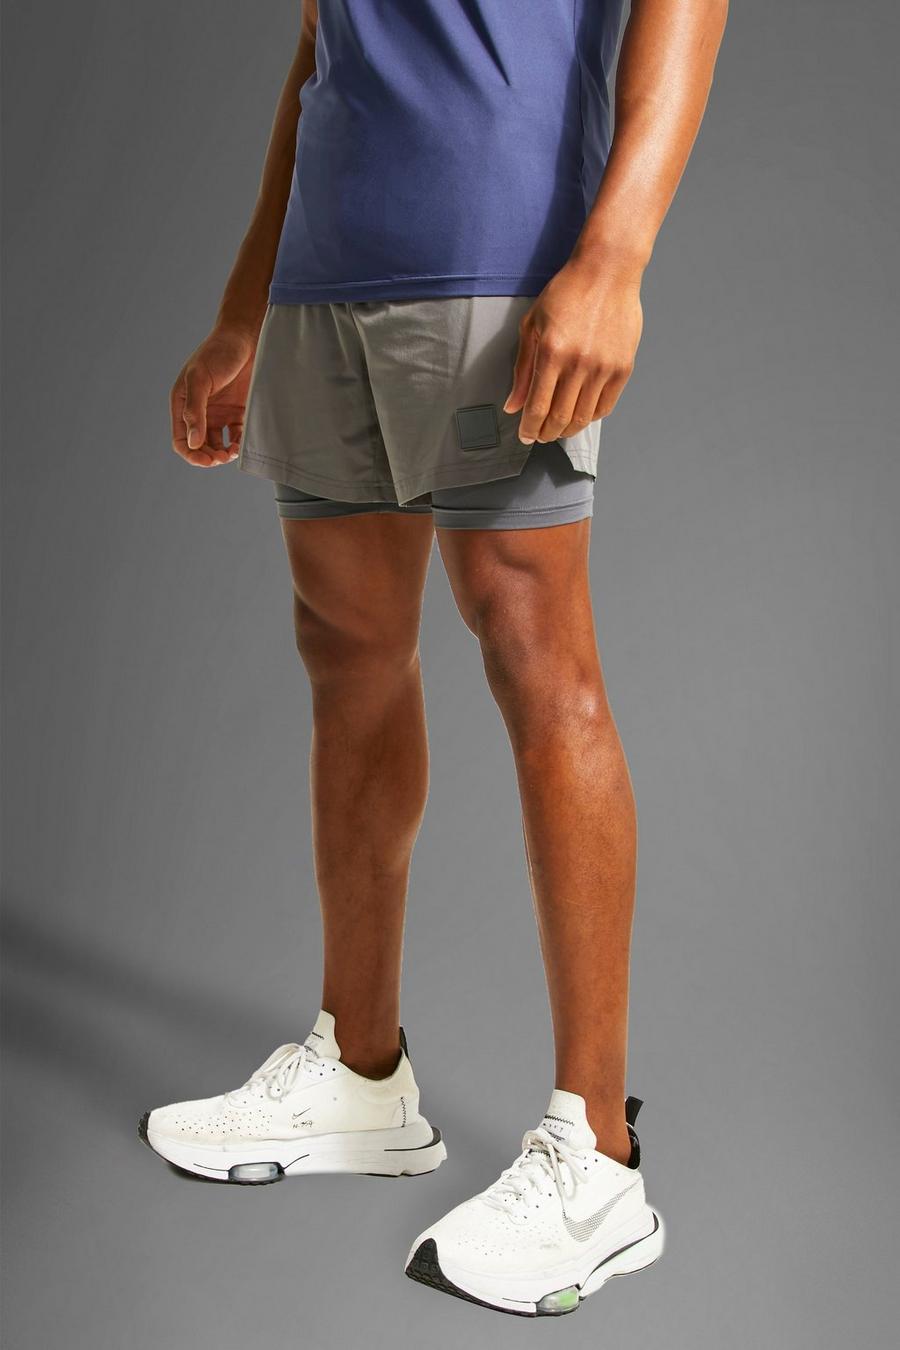 Pantaloncini Man Active per alta performance 2 in 1, Charcoal gris image number 1